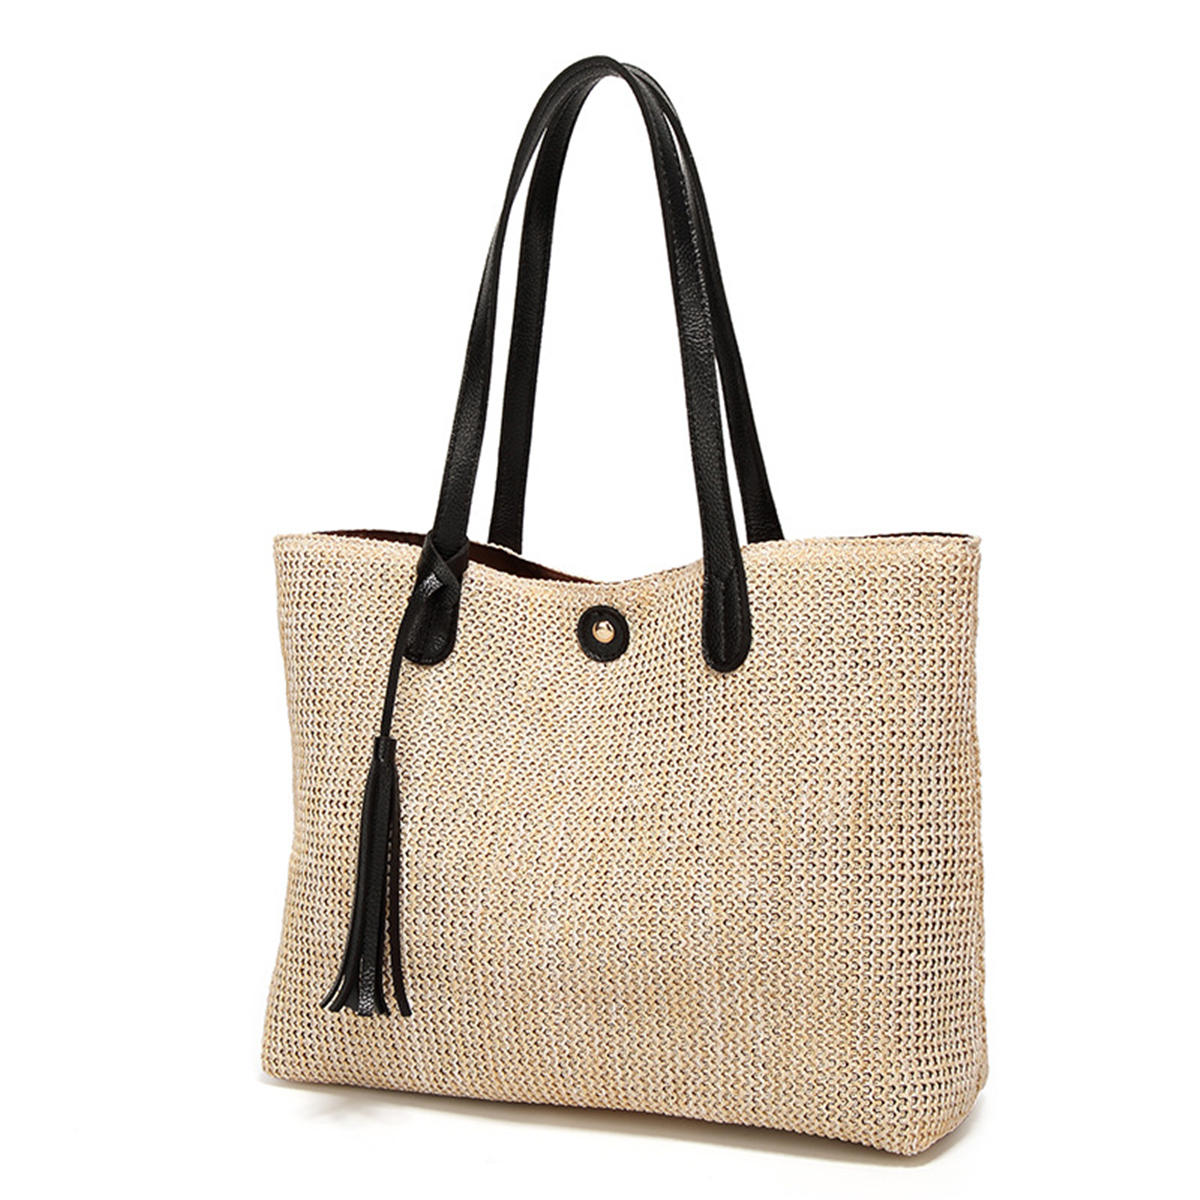 11L Women Straw Tassel Handbag Beach Shoulder Bag Shopping Tote Bag Outdoor Travel